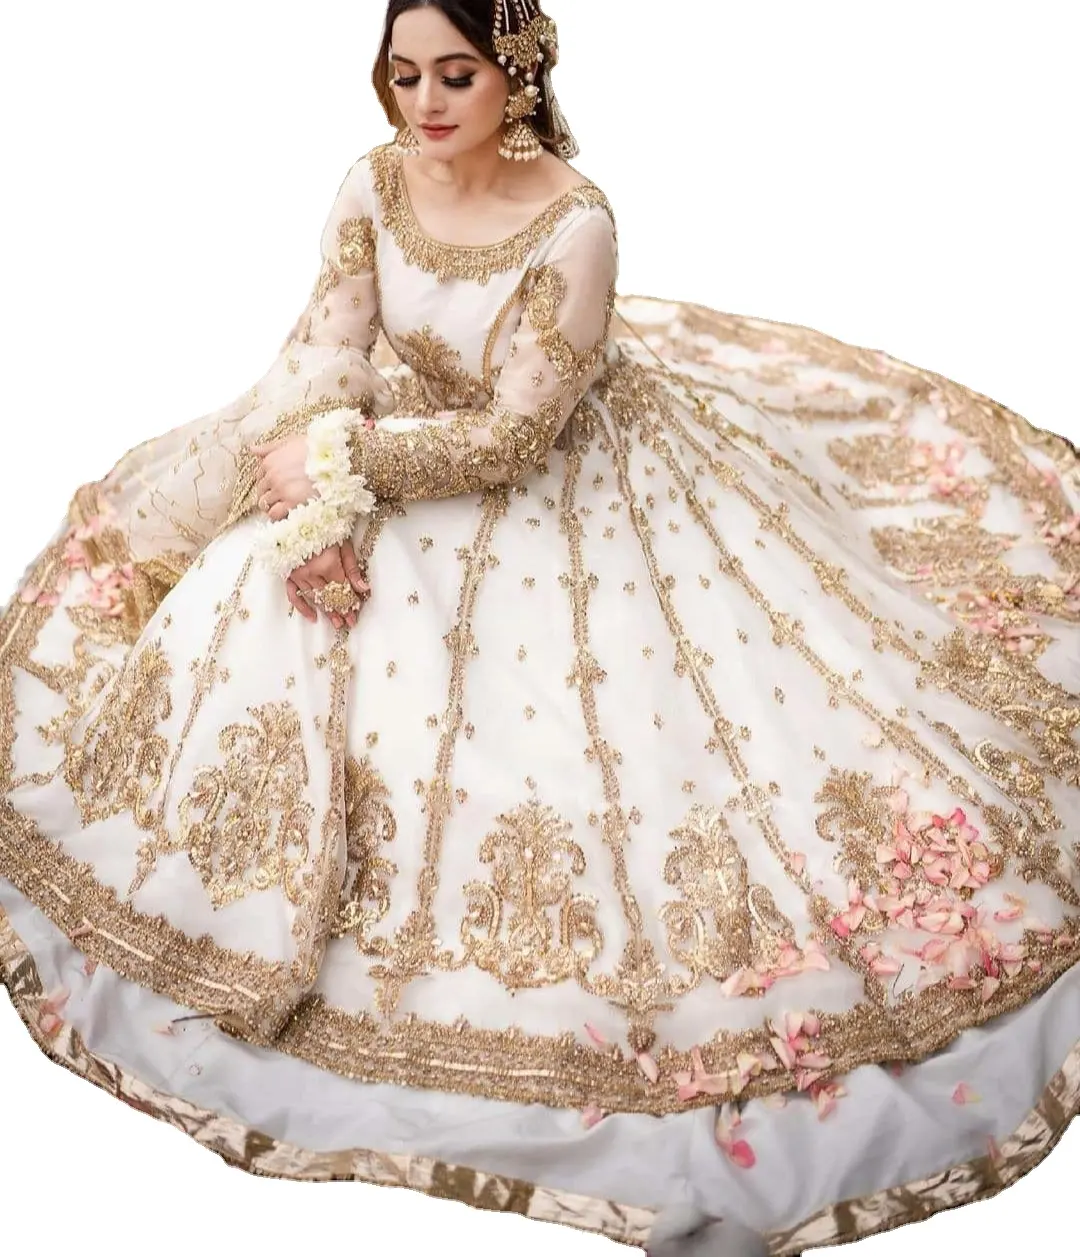 Pakistani Indian lehanga choli boutique style wedding dress traditional wedding dress for Pakistani bride lehnga saree lehnga